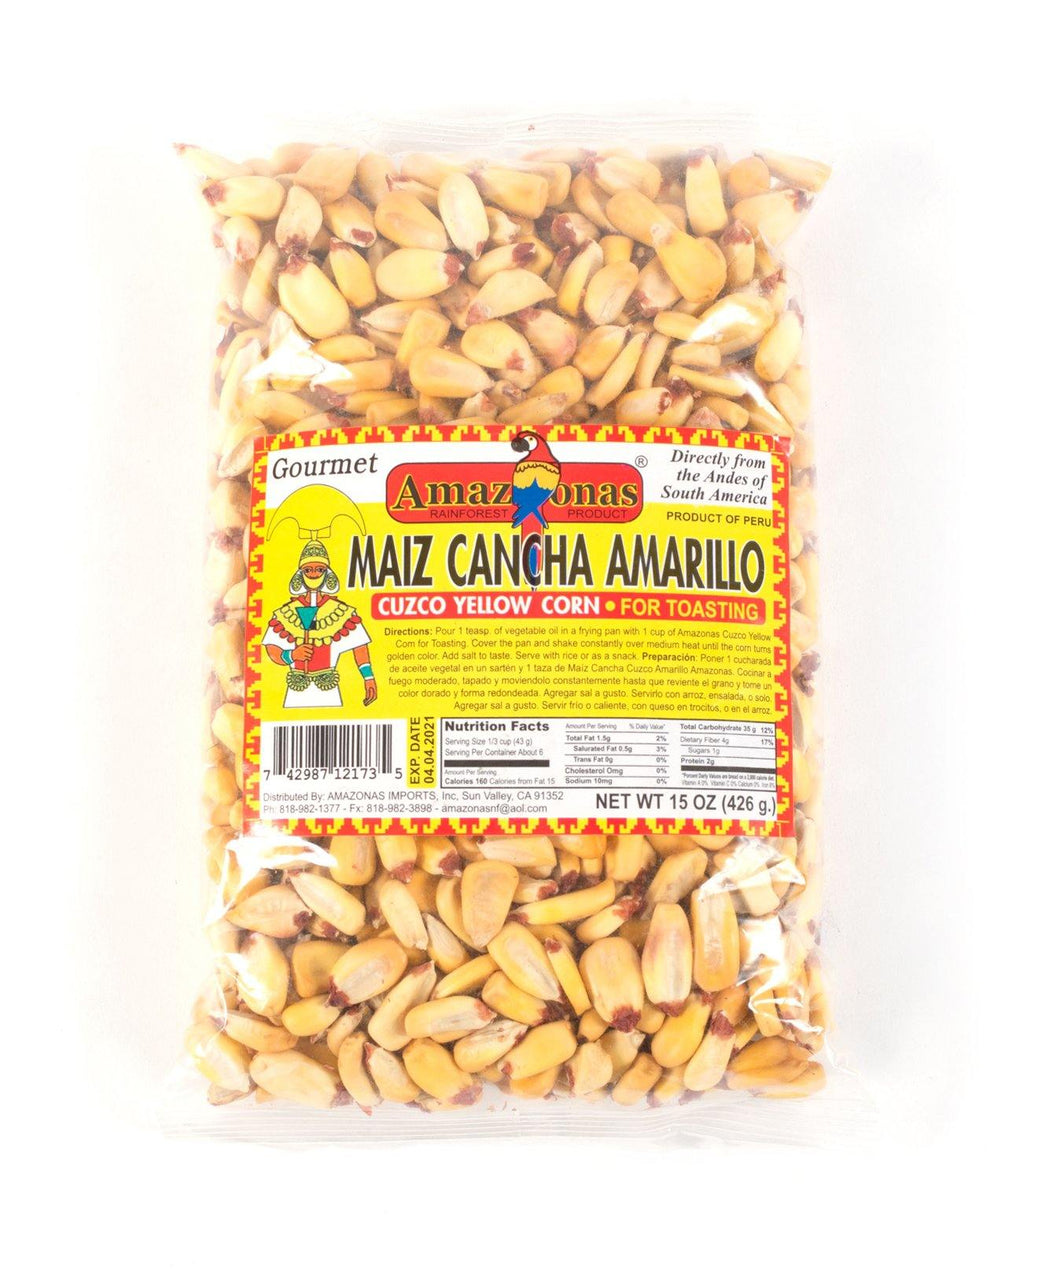 Amazonas Cuzco Yellow Corn, Maiz Cancha Amarillo - Amazonas Foods Online